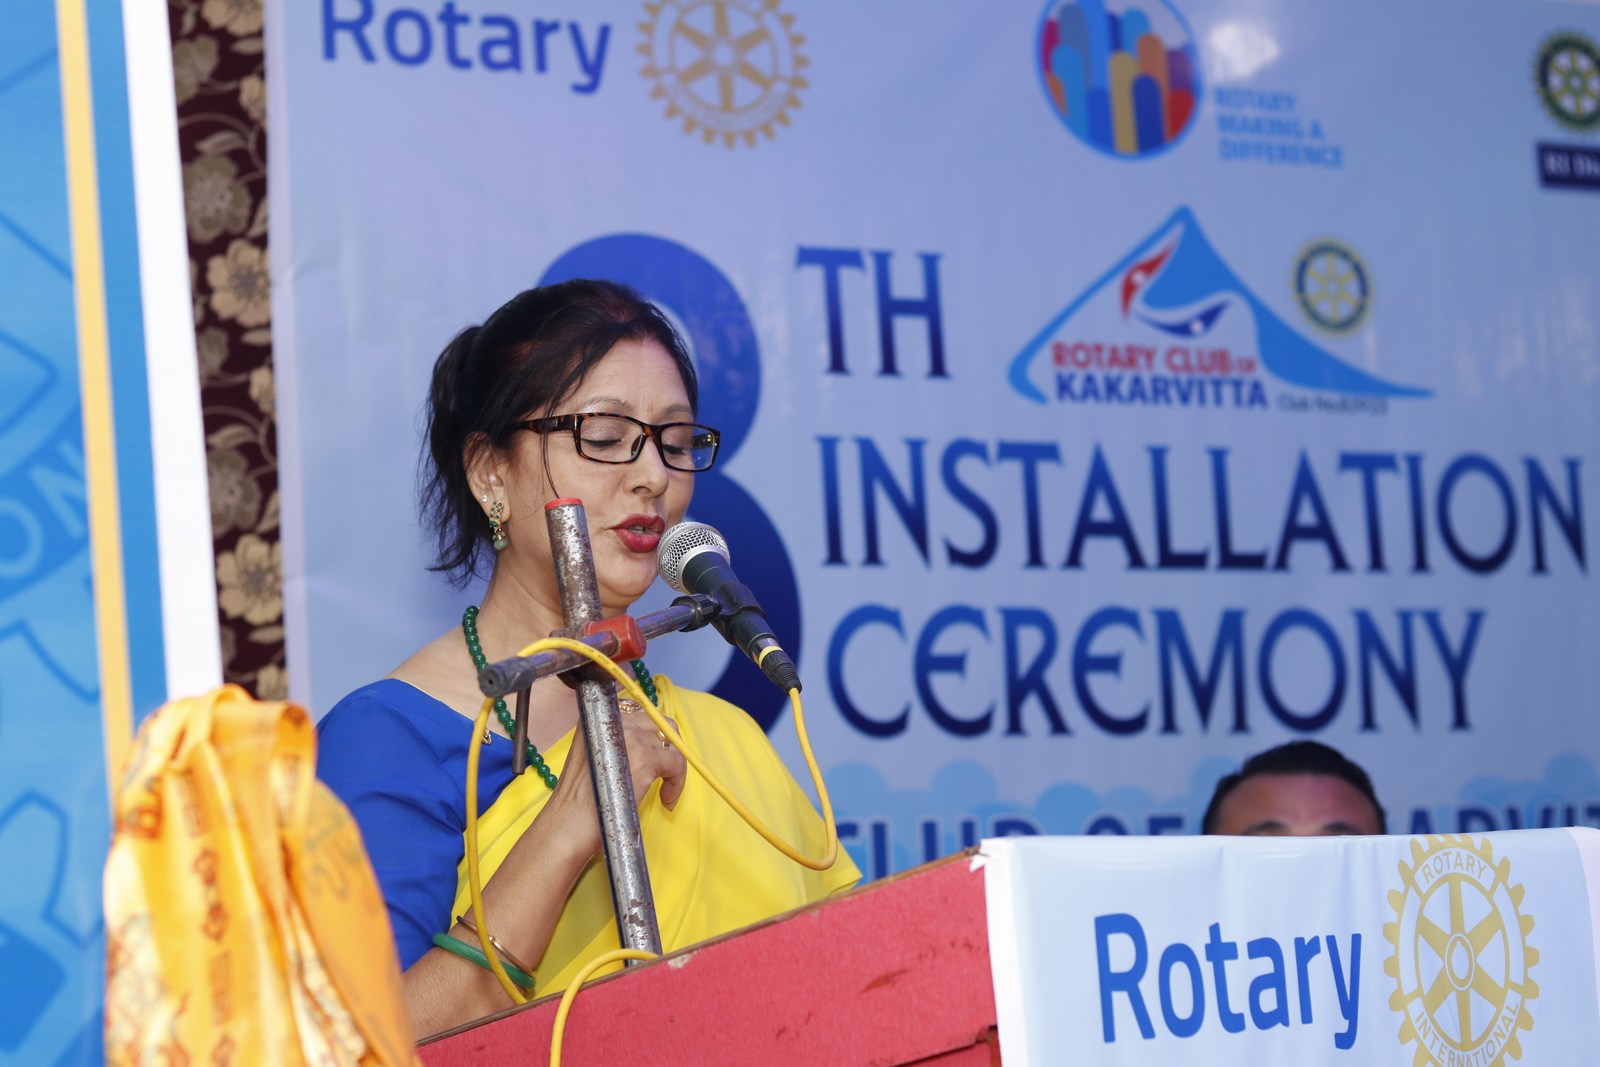 8th-Installation-Ceremony-Rotary-Club-of-Kakarvitta-23